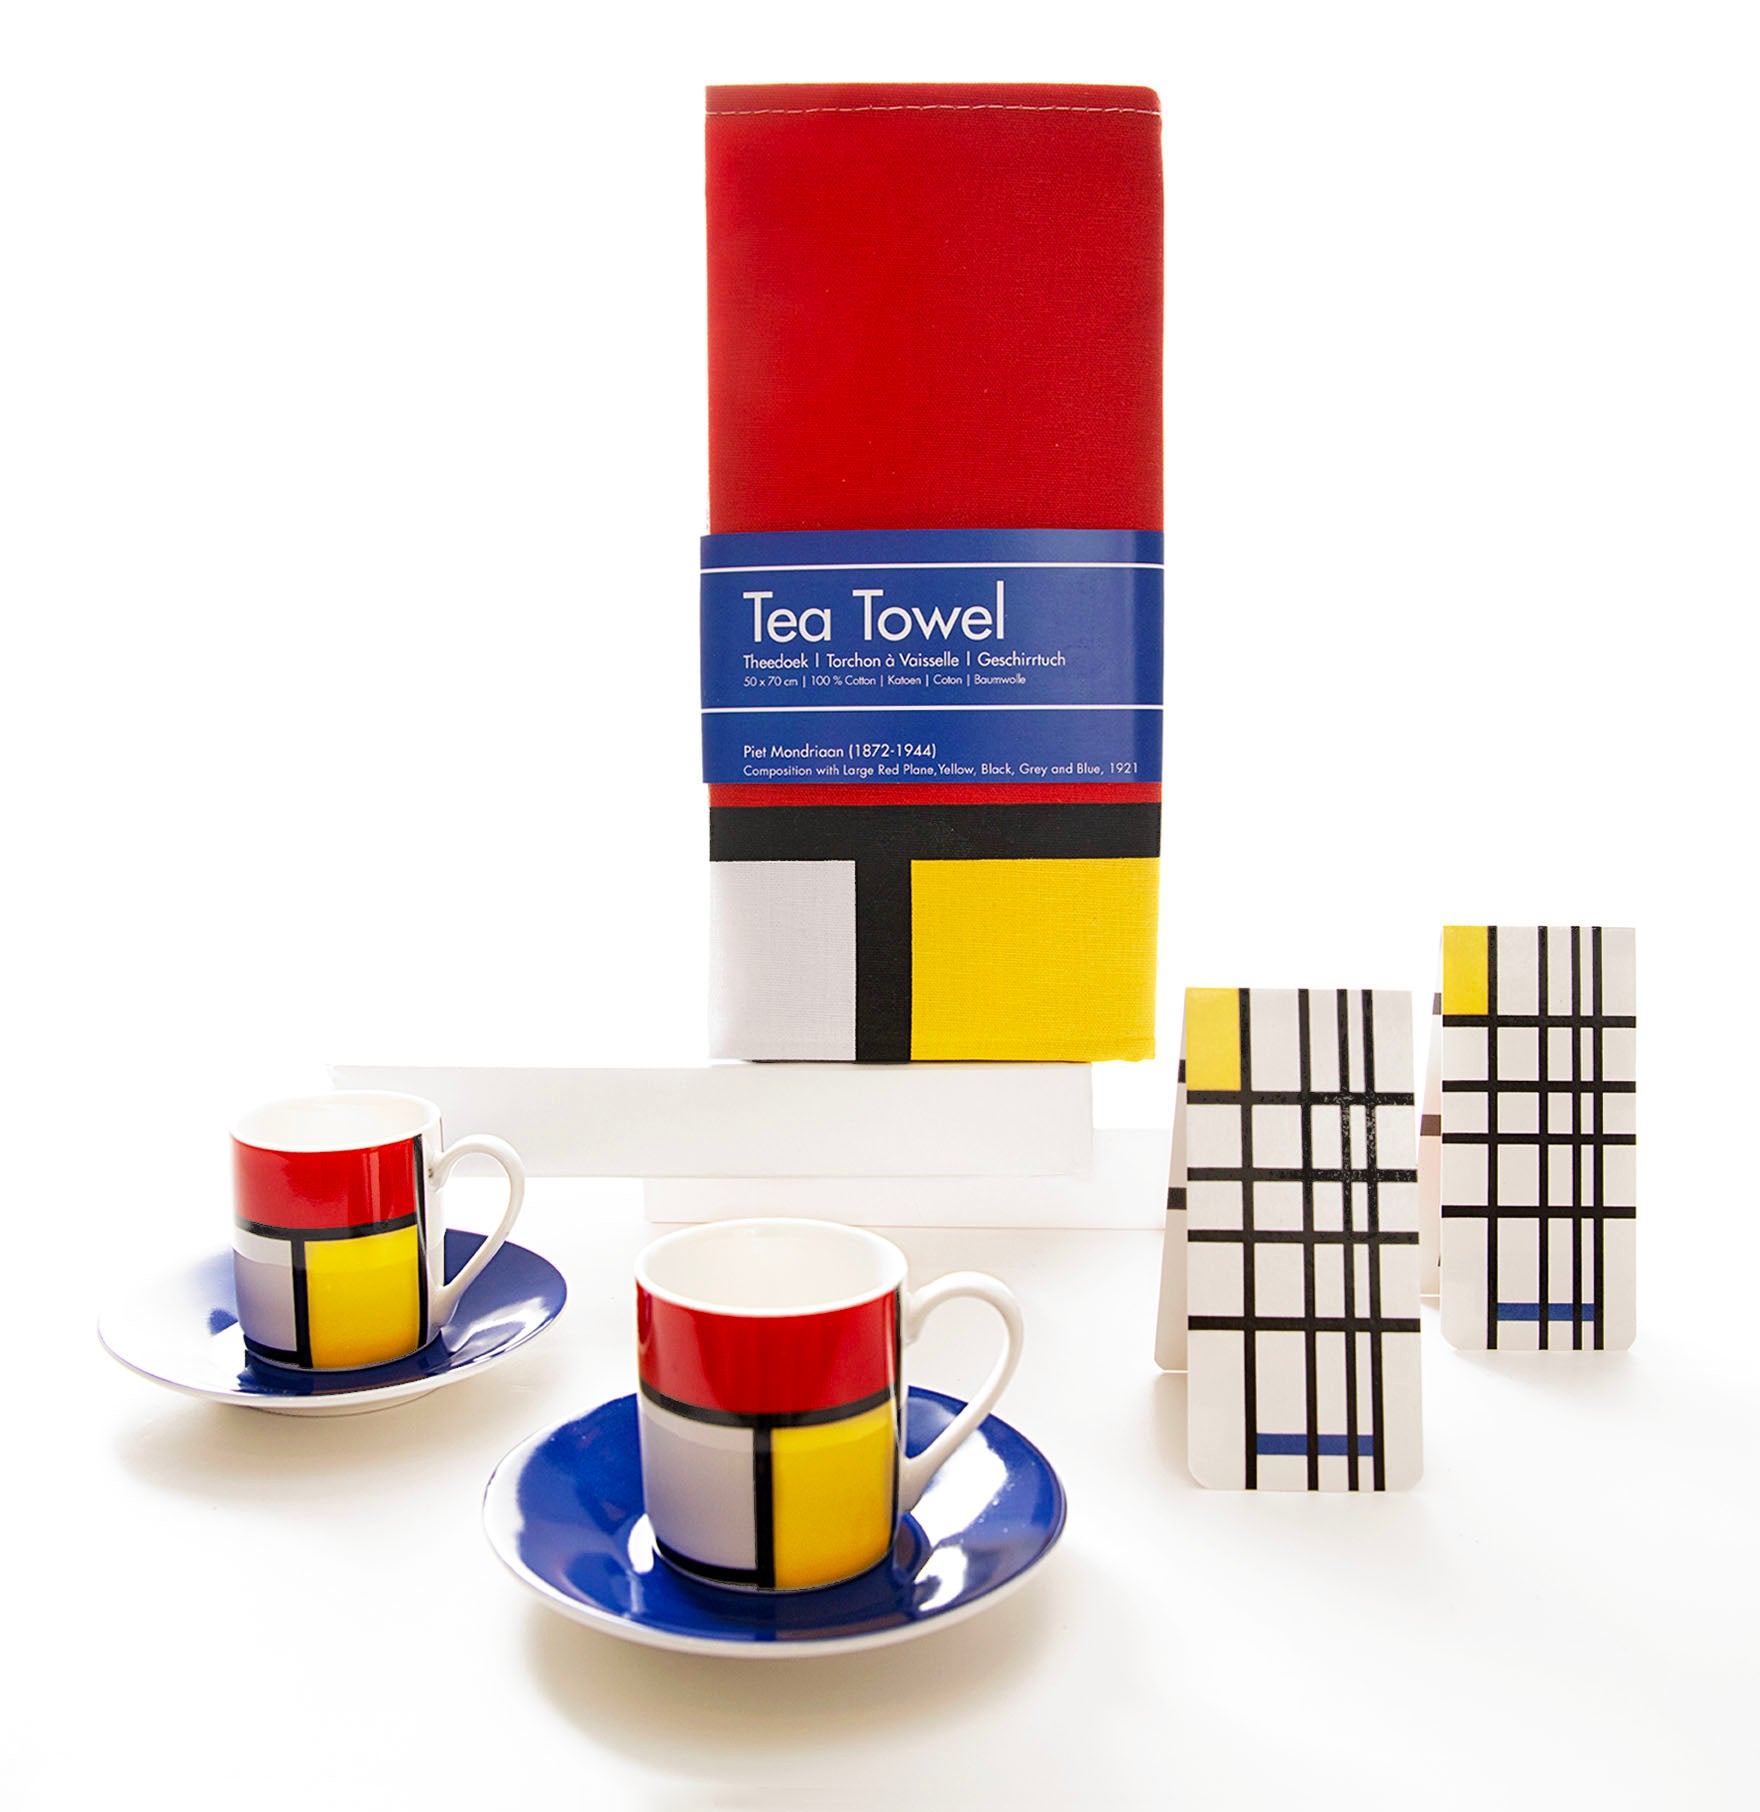 SHOP NOW! From Holland Mondrian Museum Souvenir Porcelain Espresso Gift Set!